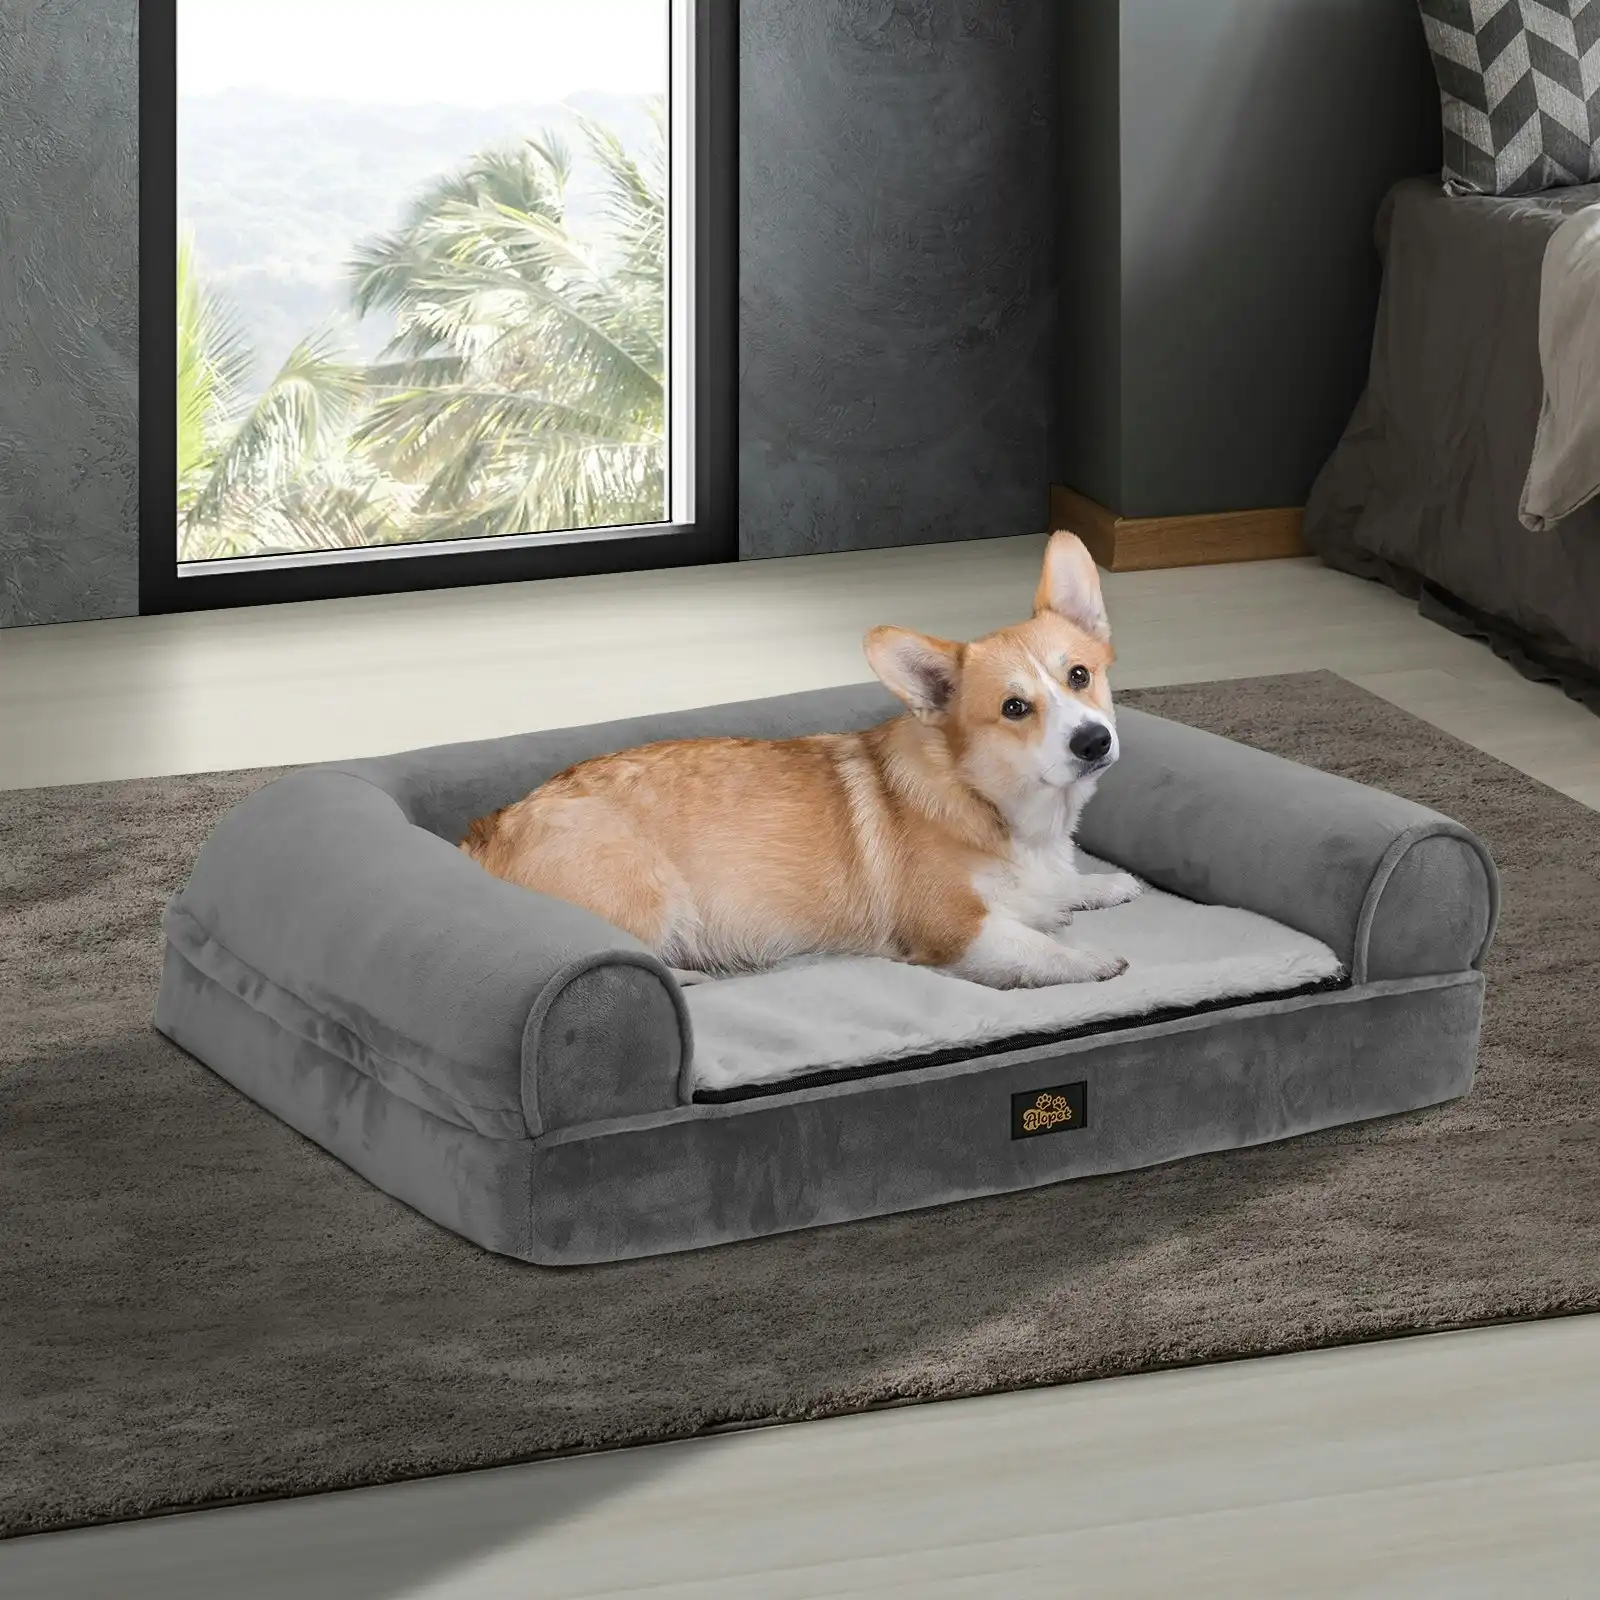 Alopet Orthopedic Dog Bed Memory Foam Pet Calming Sofa Removable Cover Large